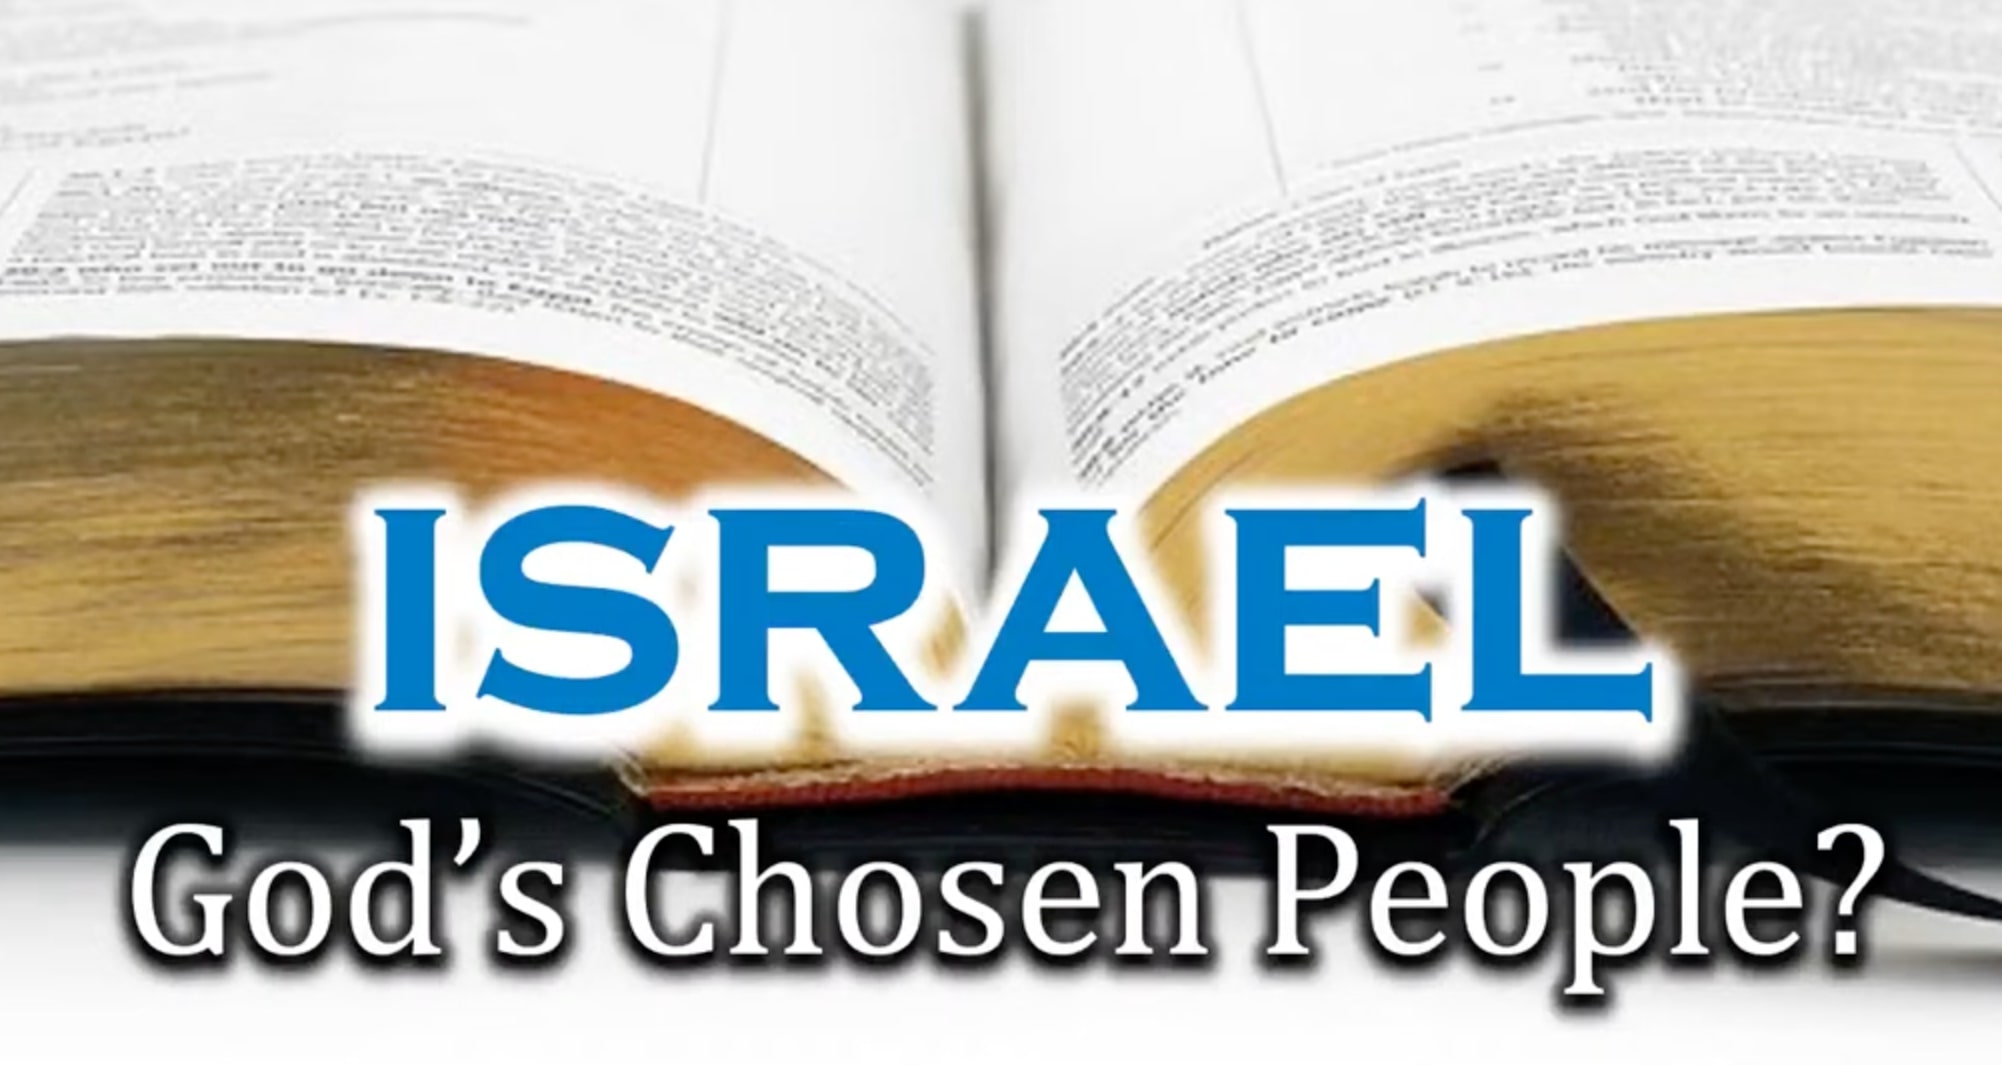 Israel — God's Chosen People?